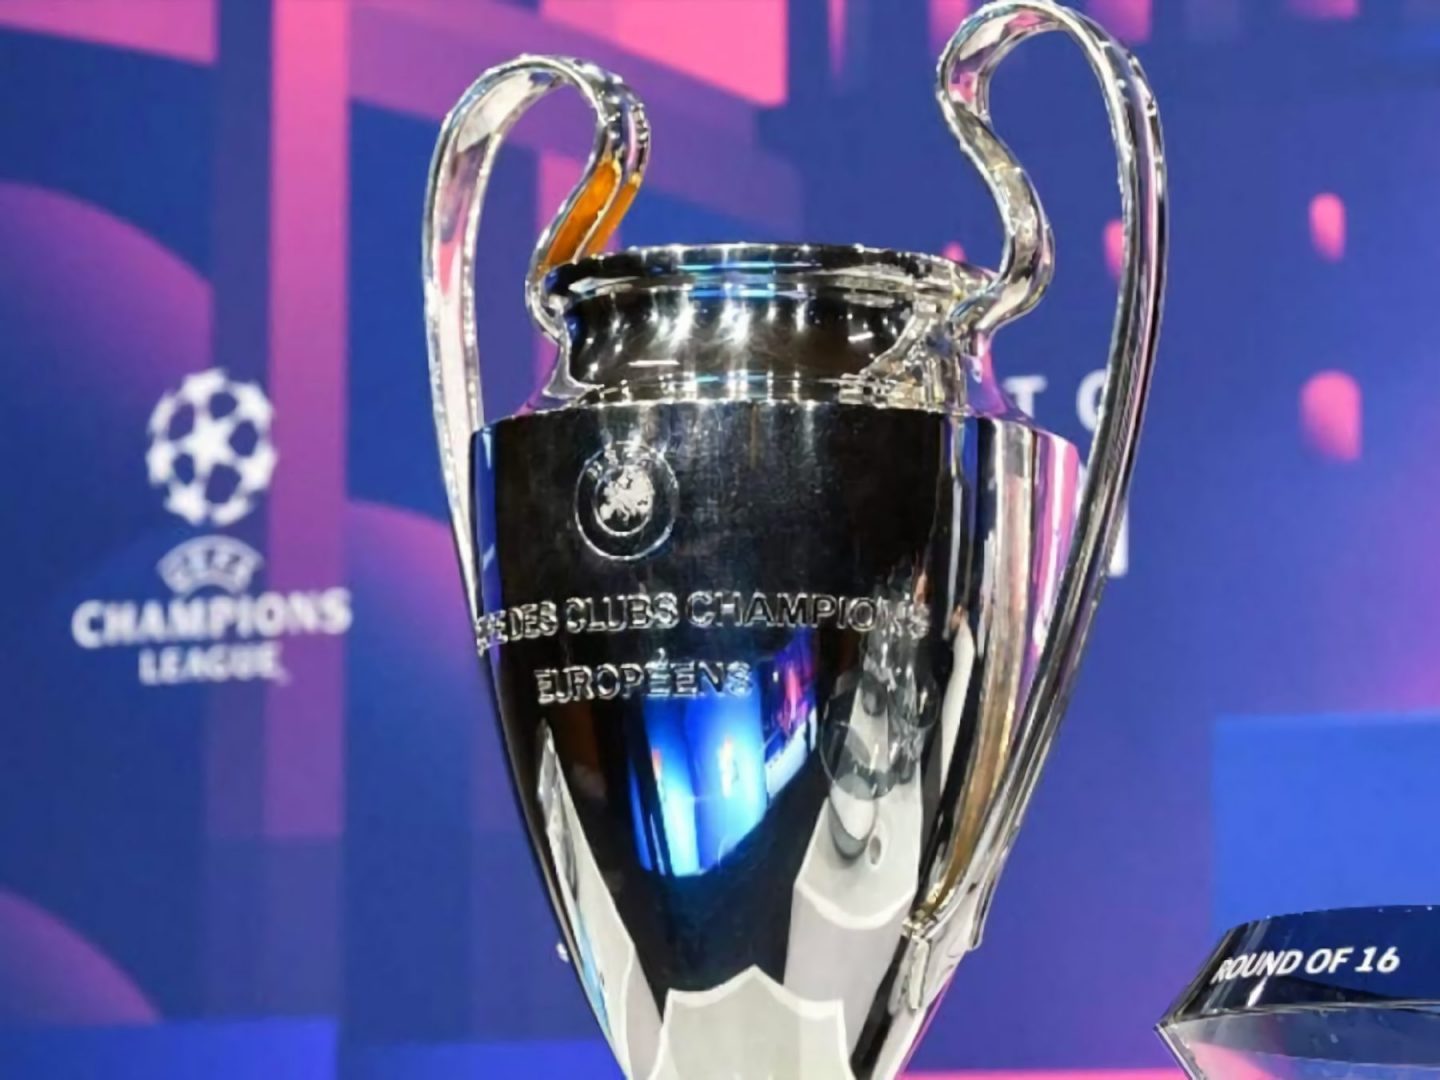 UEFA Champions League terá transmissão no Brasil pela HBO Max